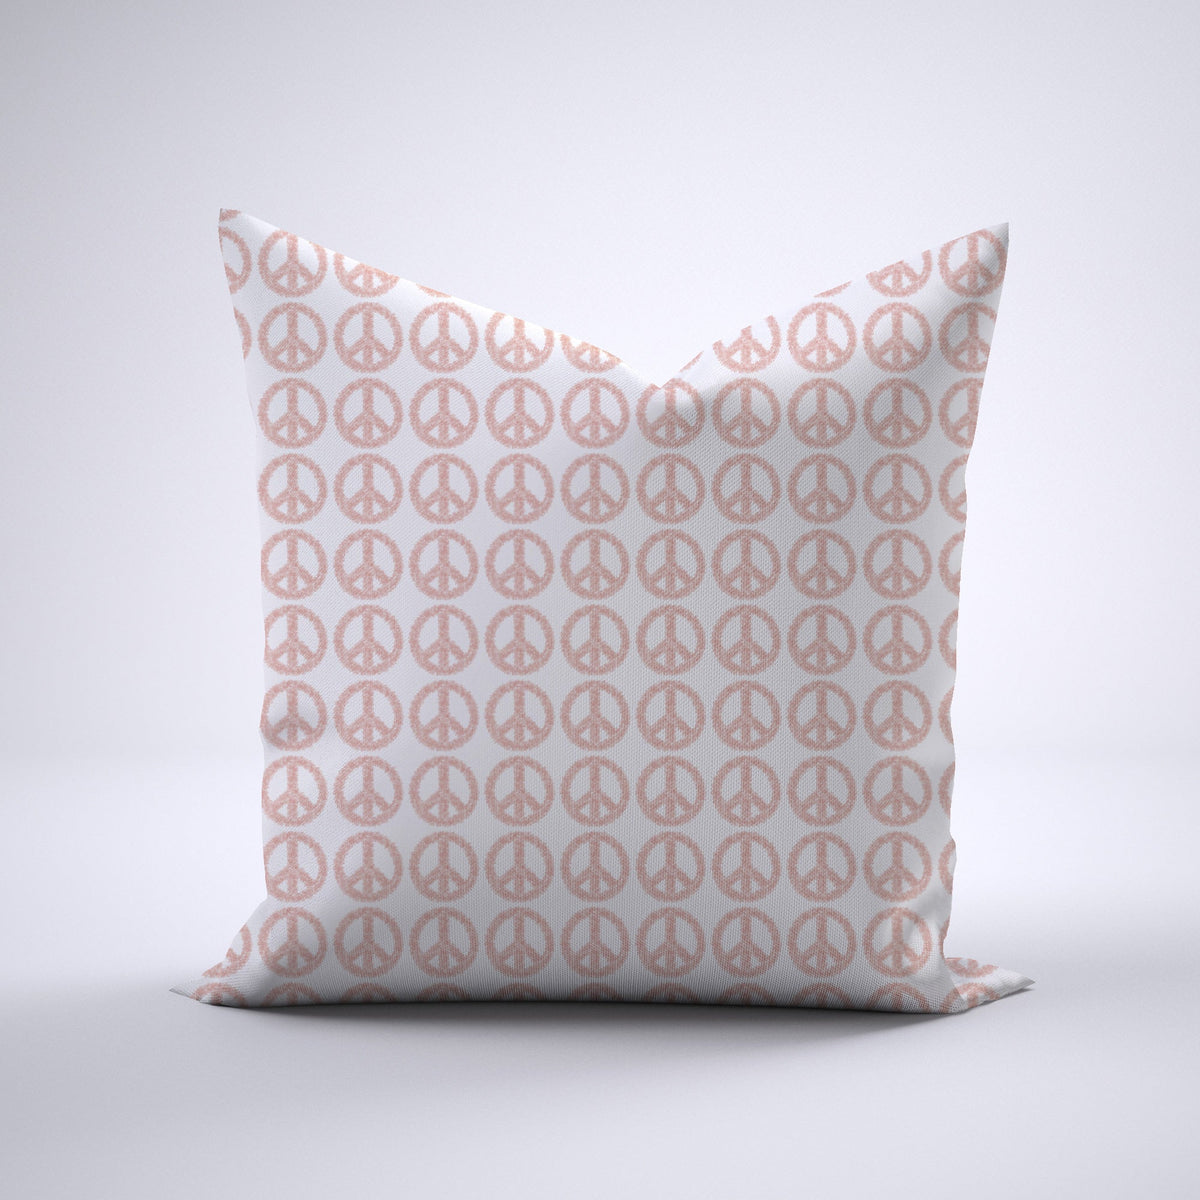 Throw Pillow - Peace Light Pink Bedding, Pillows, Throw Pillows MWW 